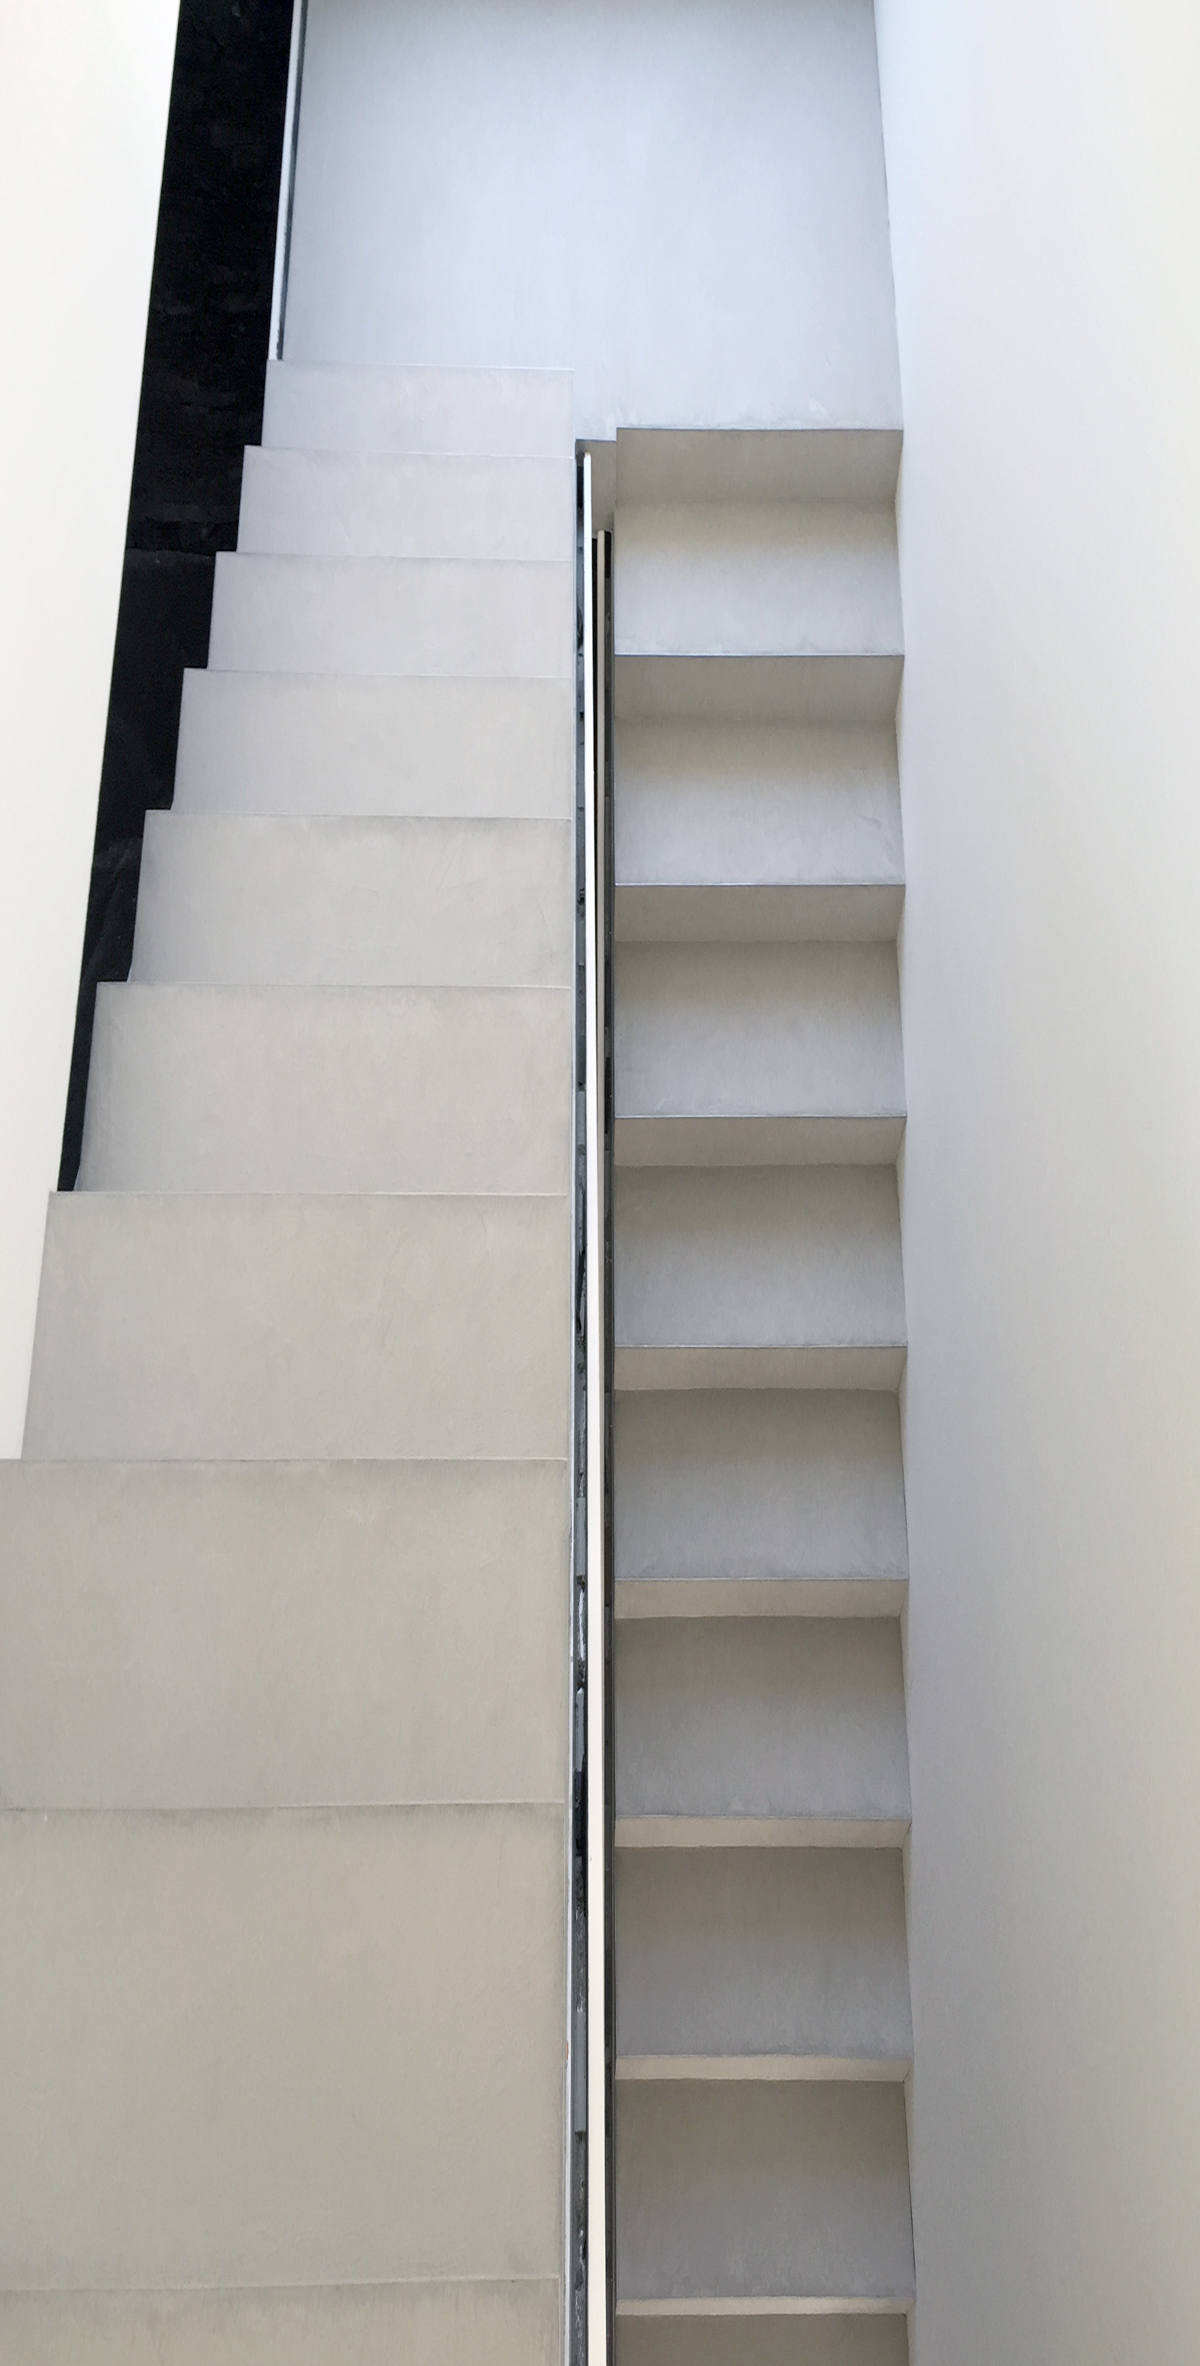 Hotel con escaleras de microcemento en Murcia 